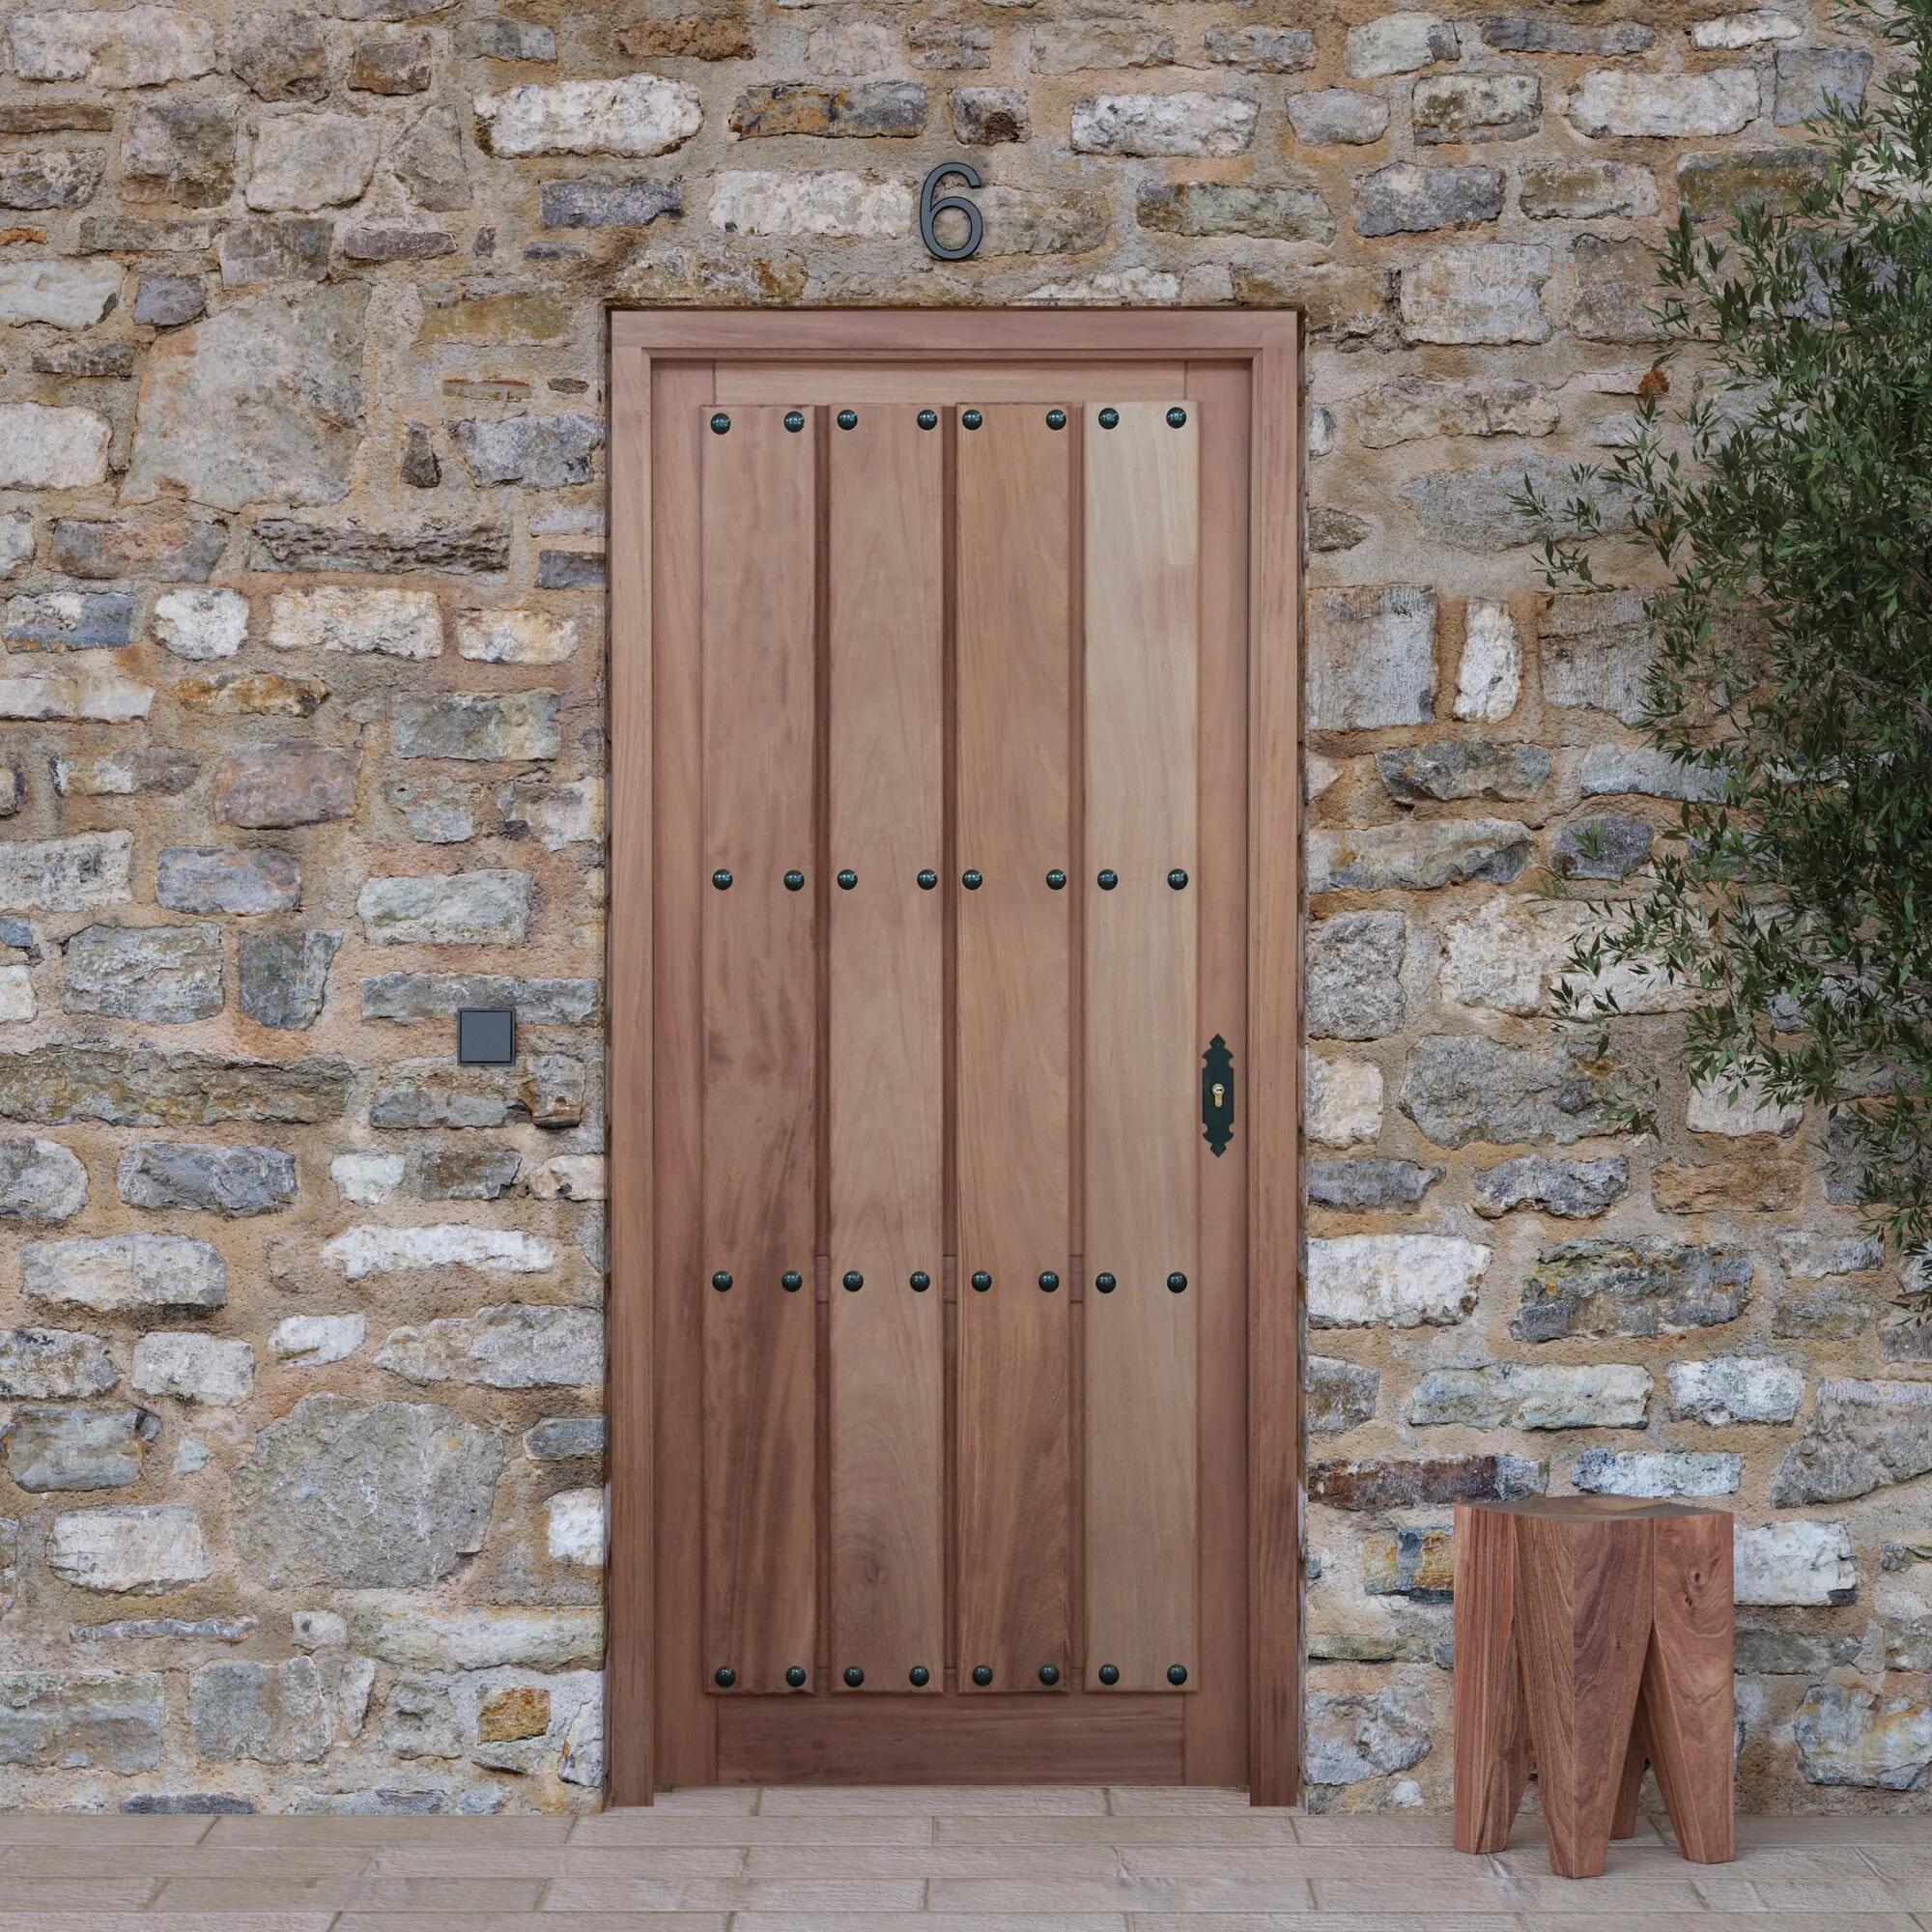 Puerta blindada izquierda madera para barnizar/madera para